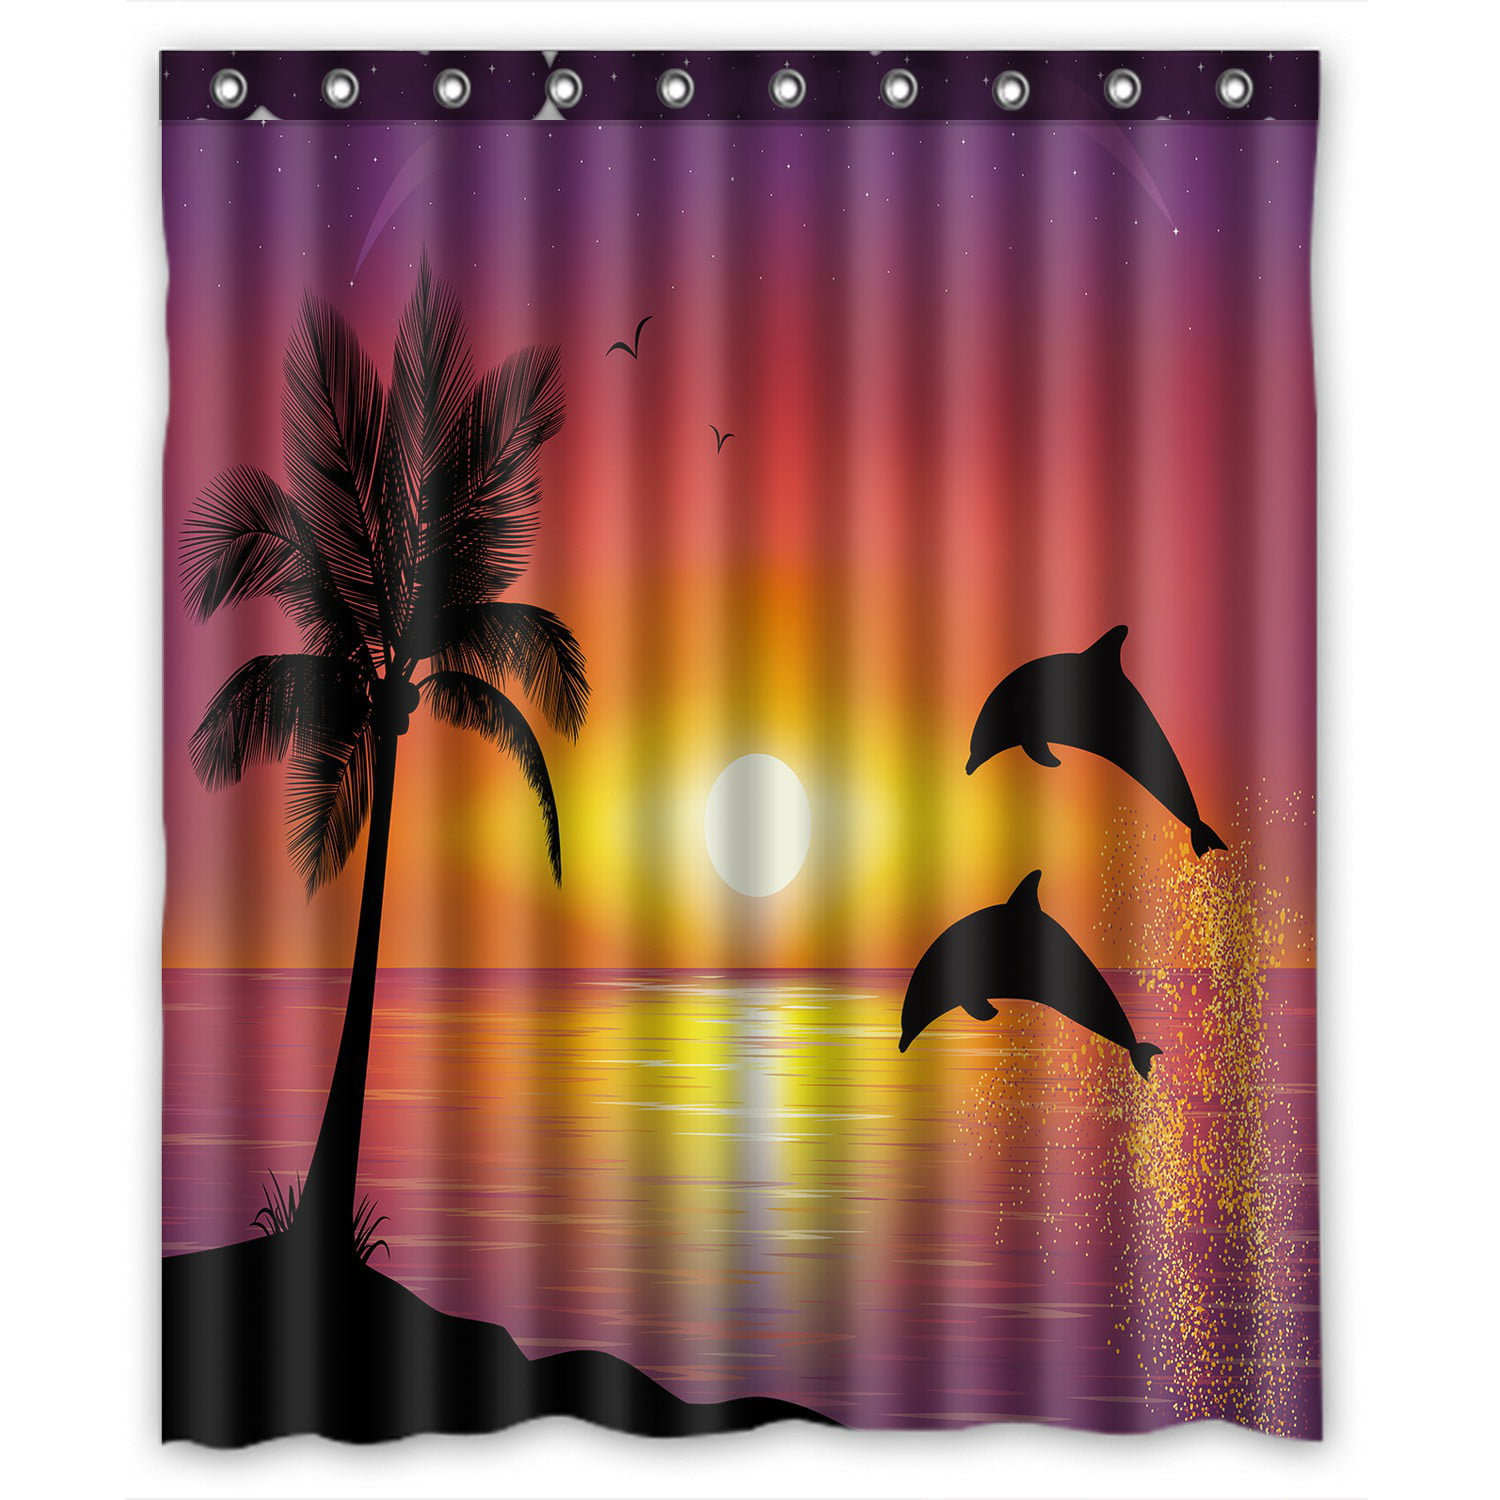 Details about   Sunset Ocean Beach Seaside Palm Trees Shower Curtain Bathroom Waterproof Fabric 